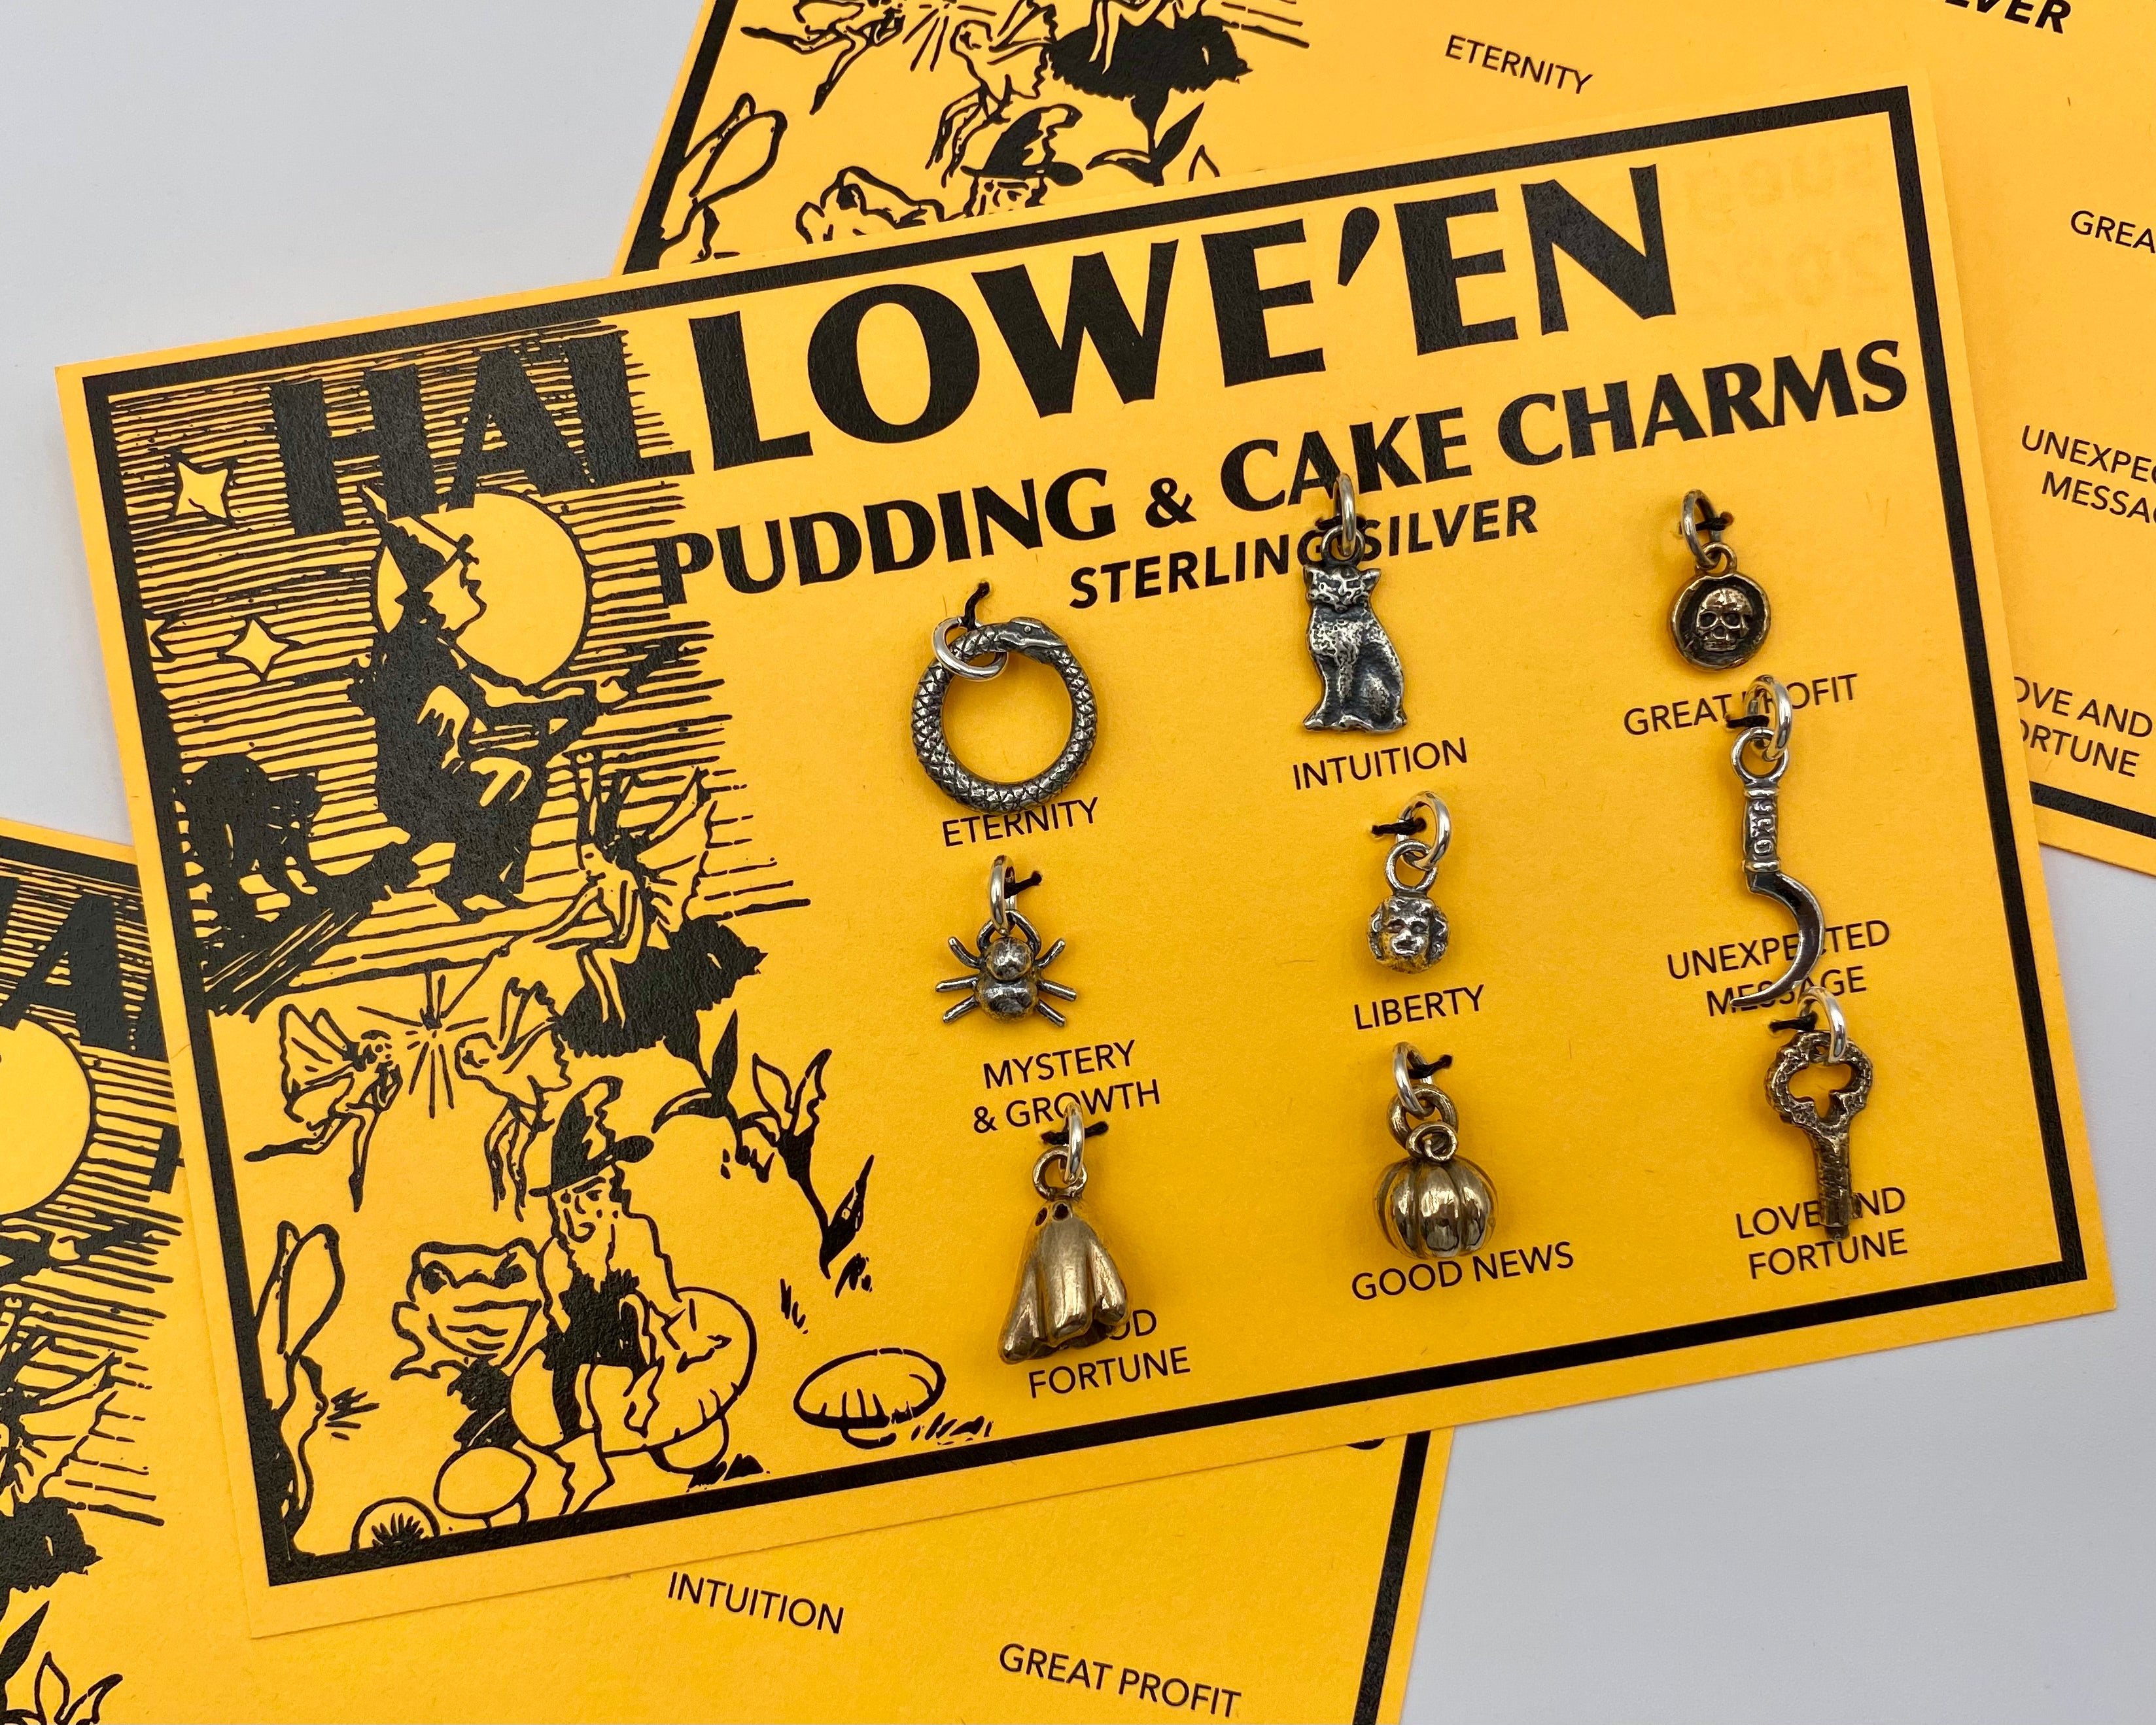 Hallowe'en Pudding & Cake Necklace Charm Set